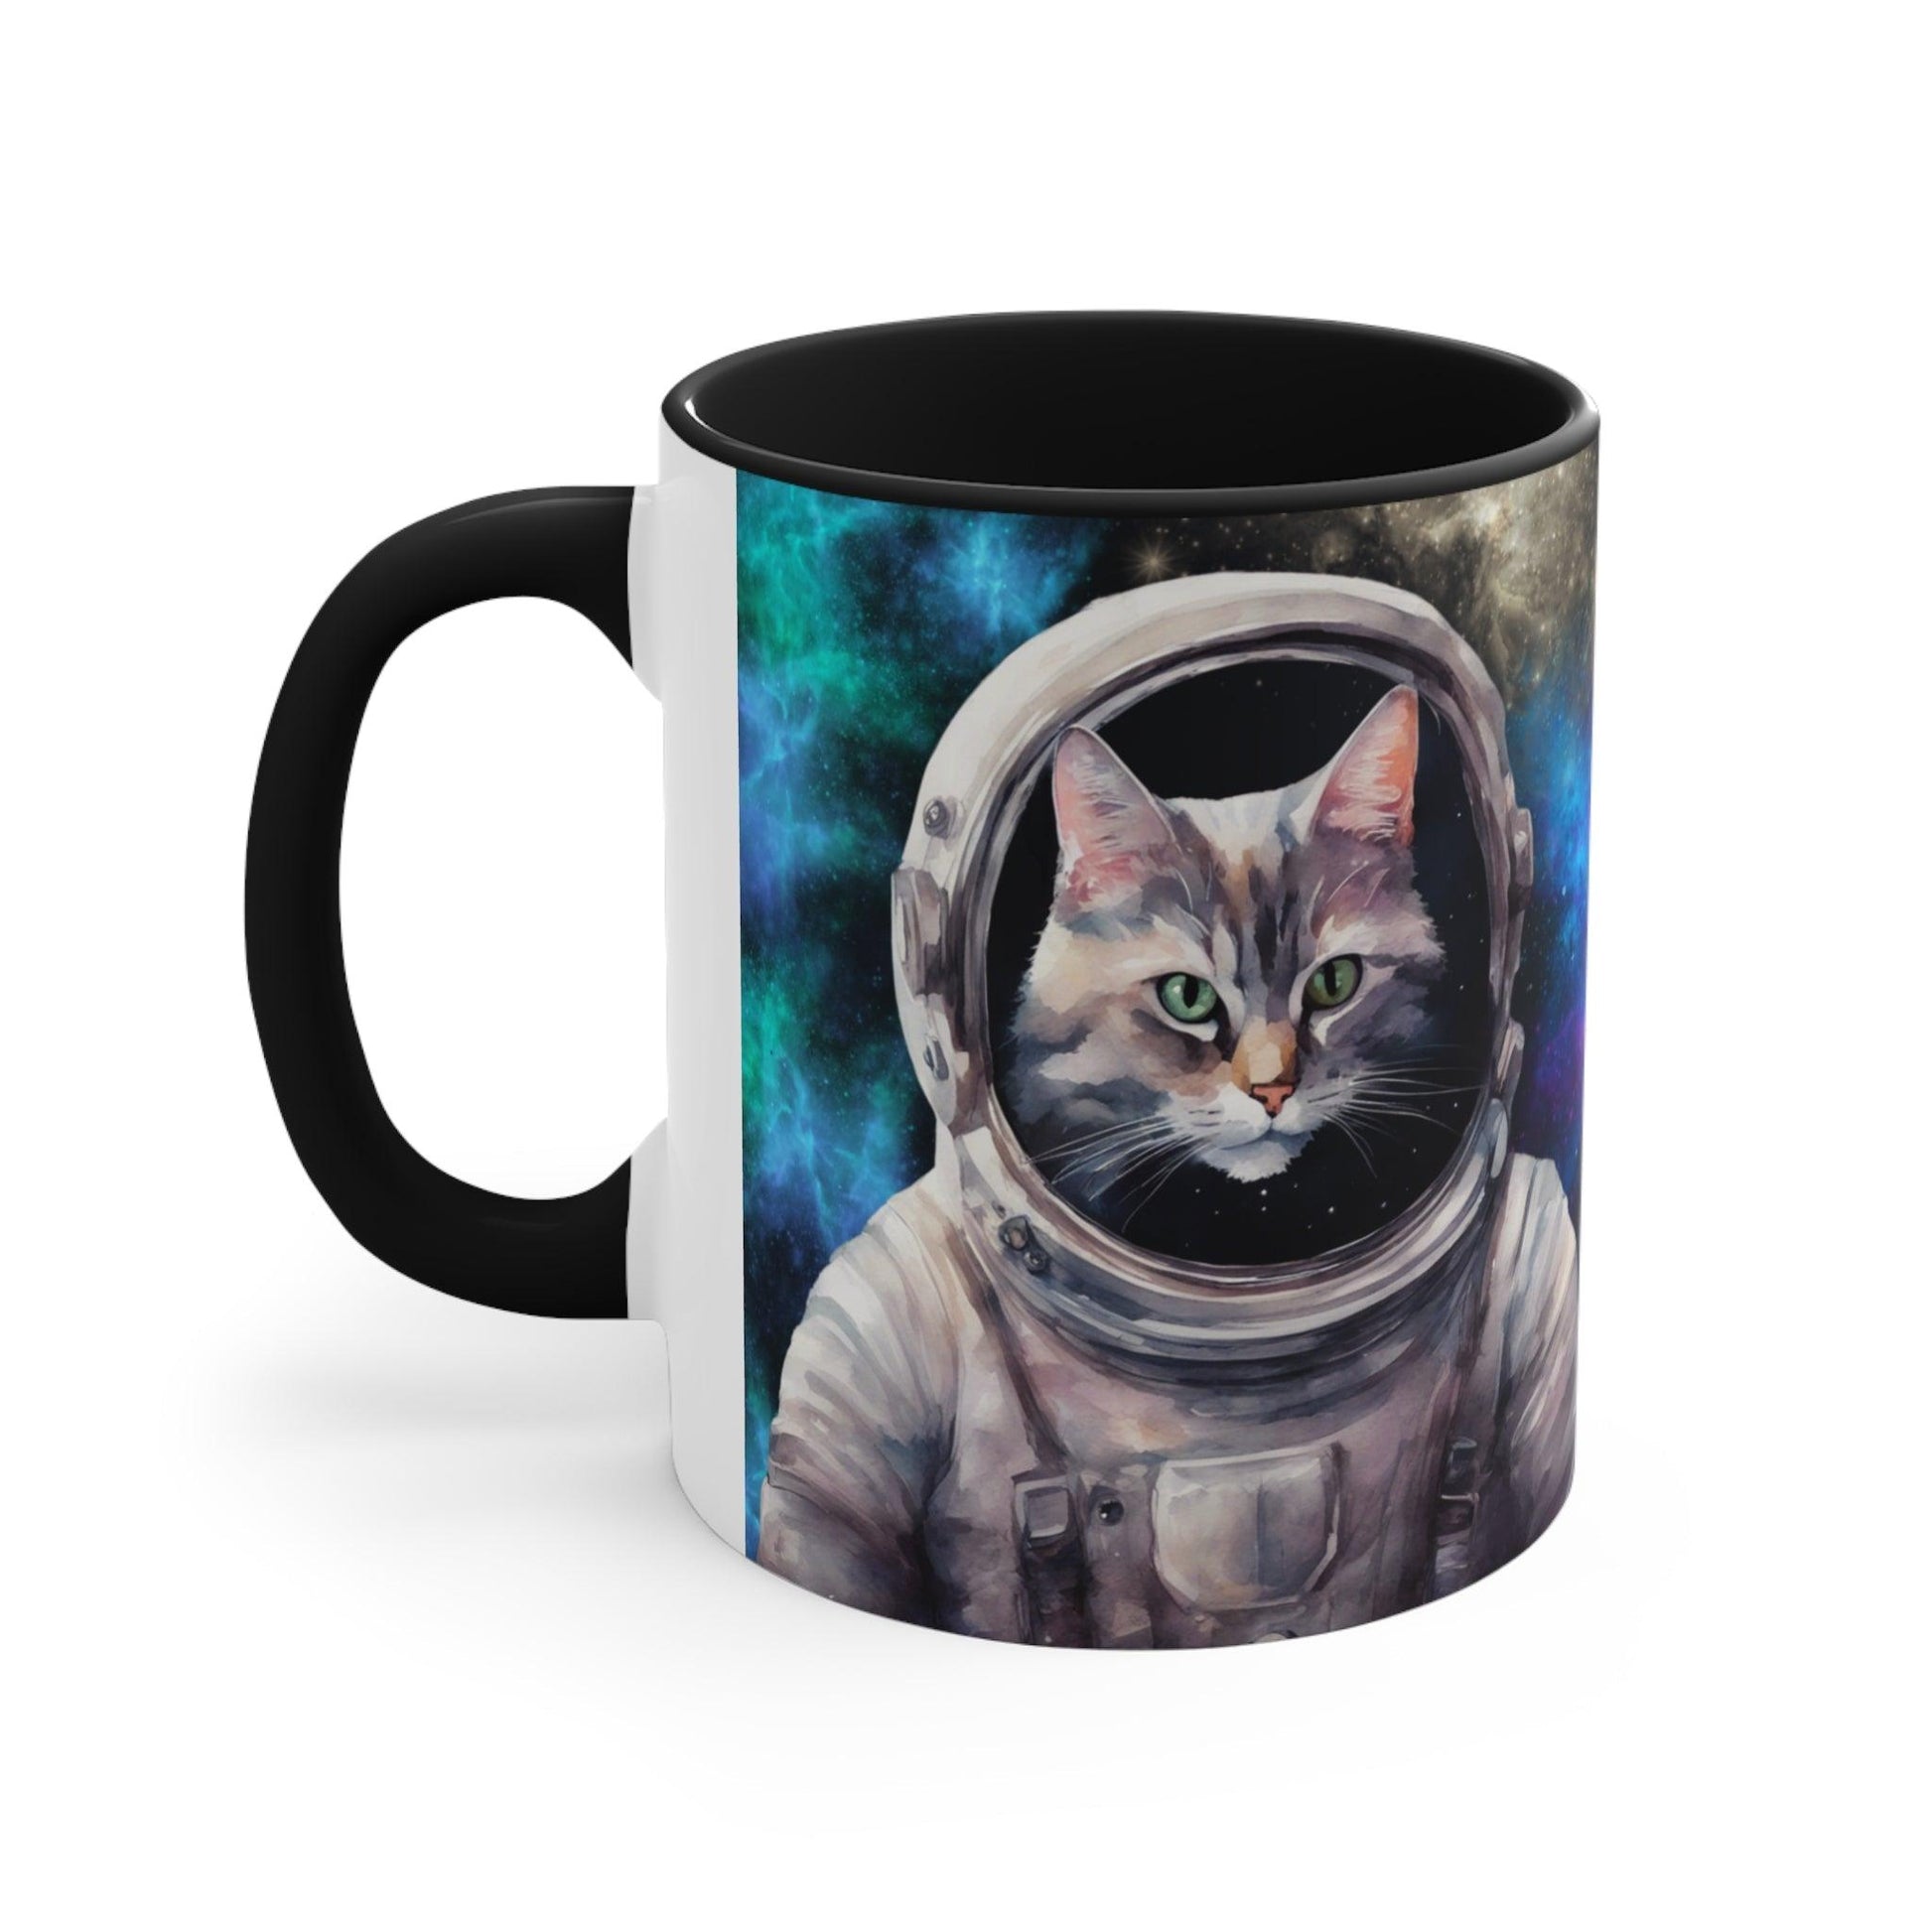 Mug "Reach for the Stars" - Cat Astronaut - Accent Coffee Mug, 11oz - Soulshinecreators